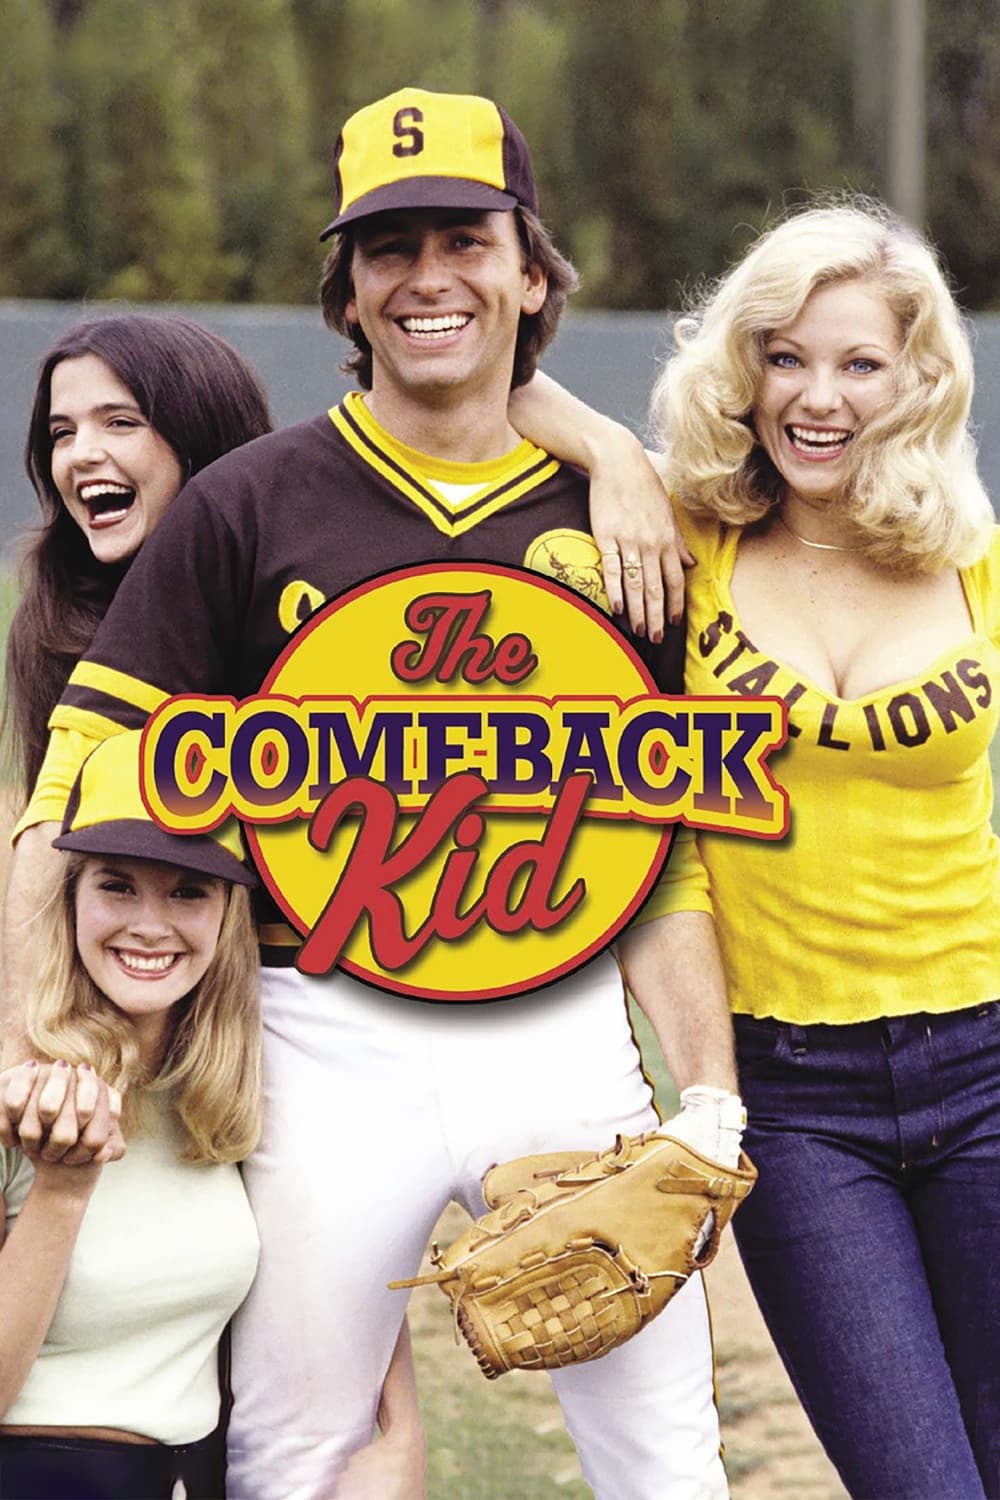 The Comeback Kid (1980)